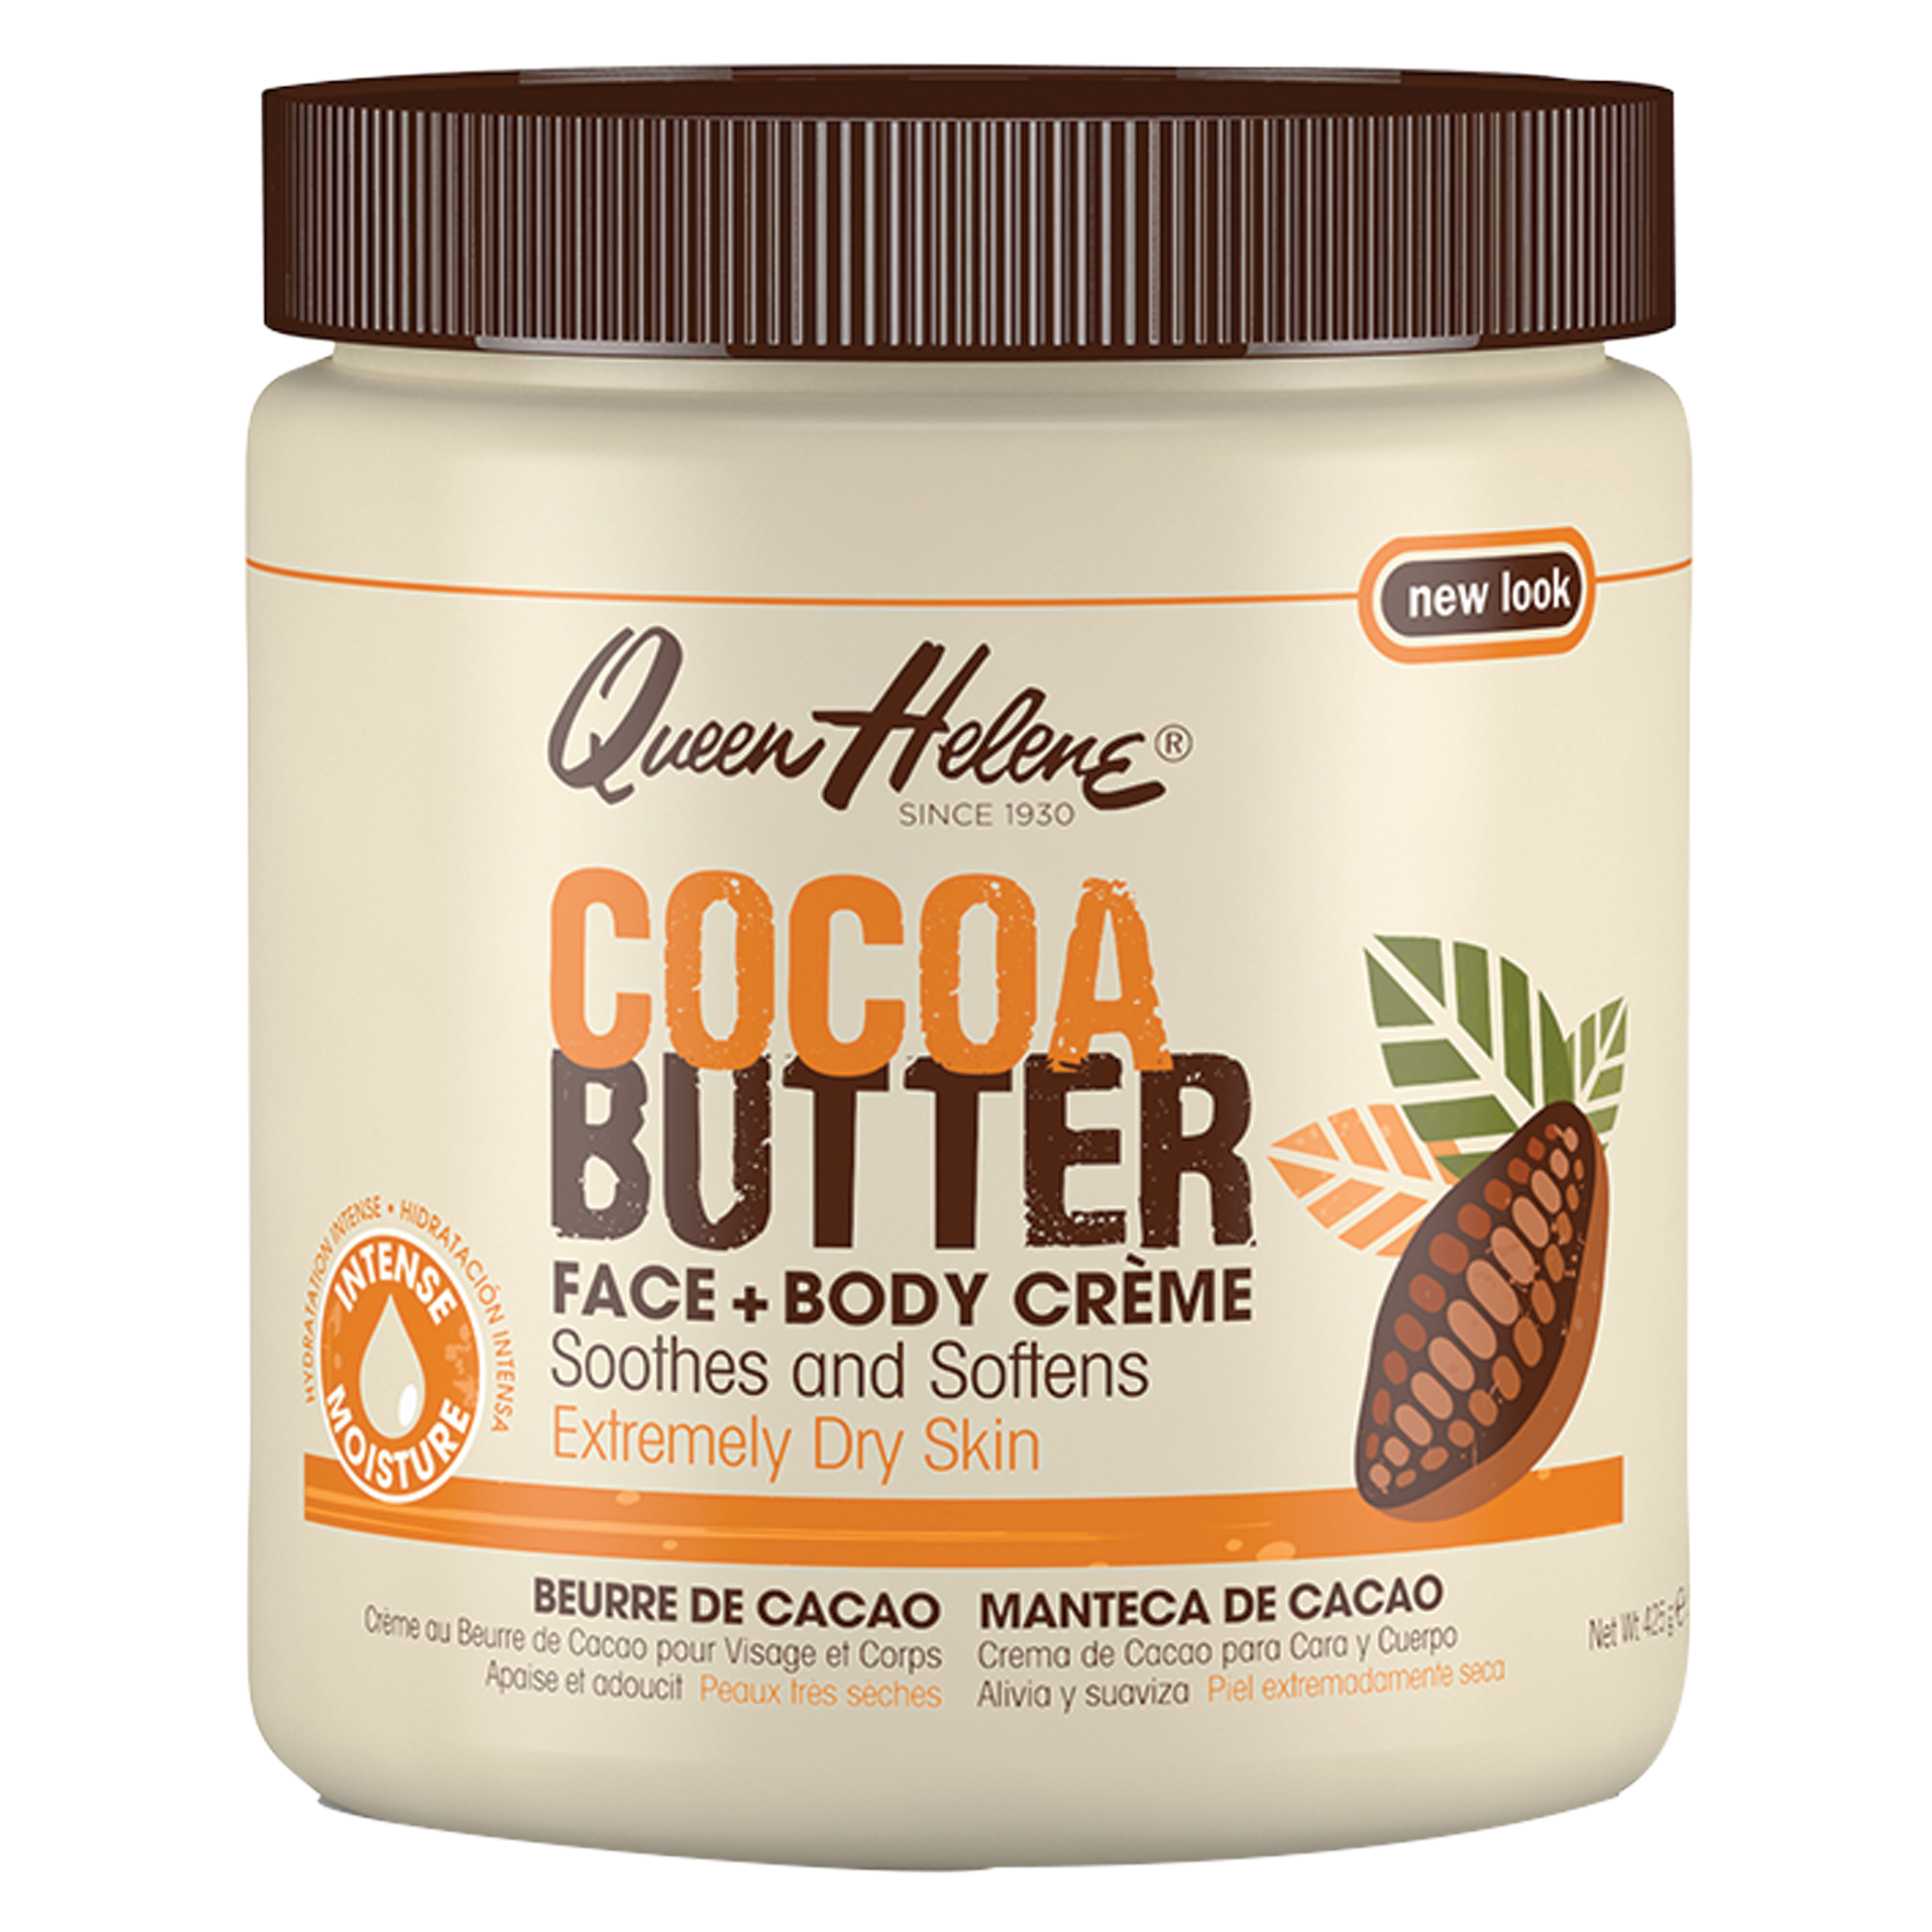 Cocoa Butter Face + Body Crème